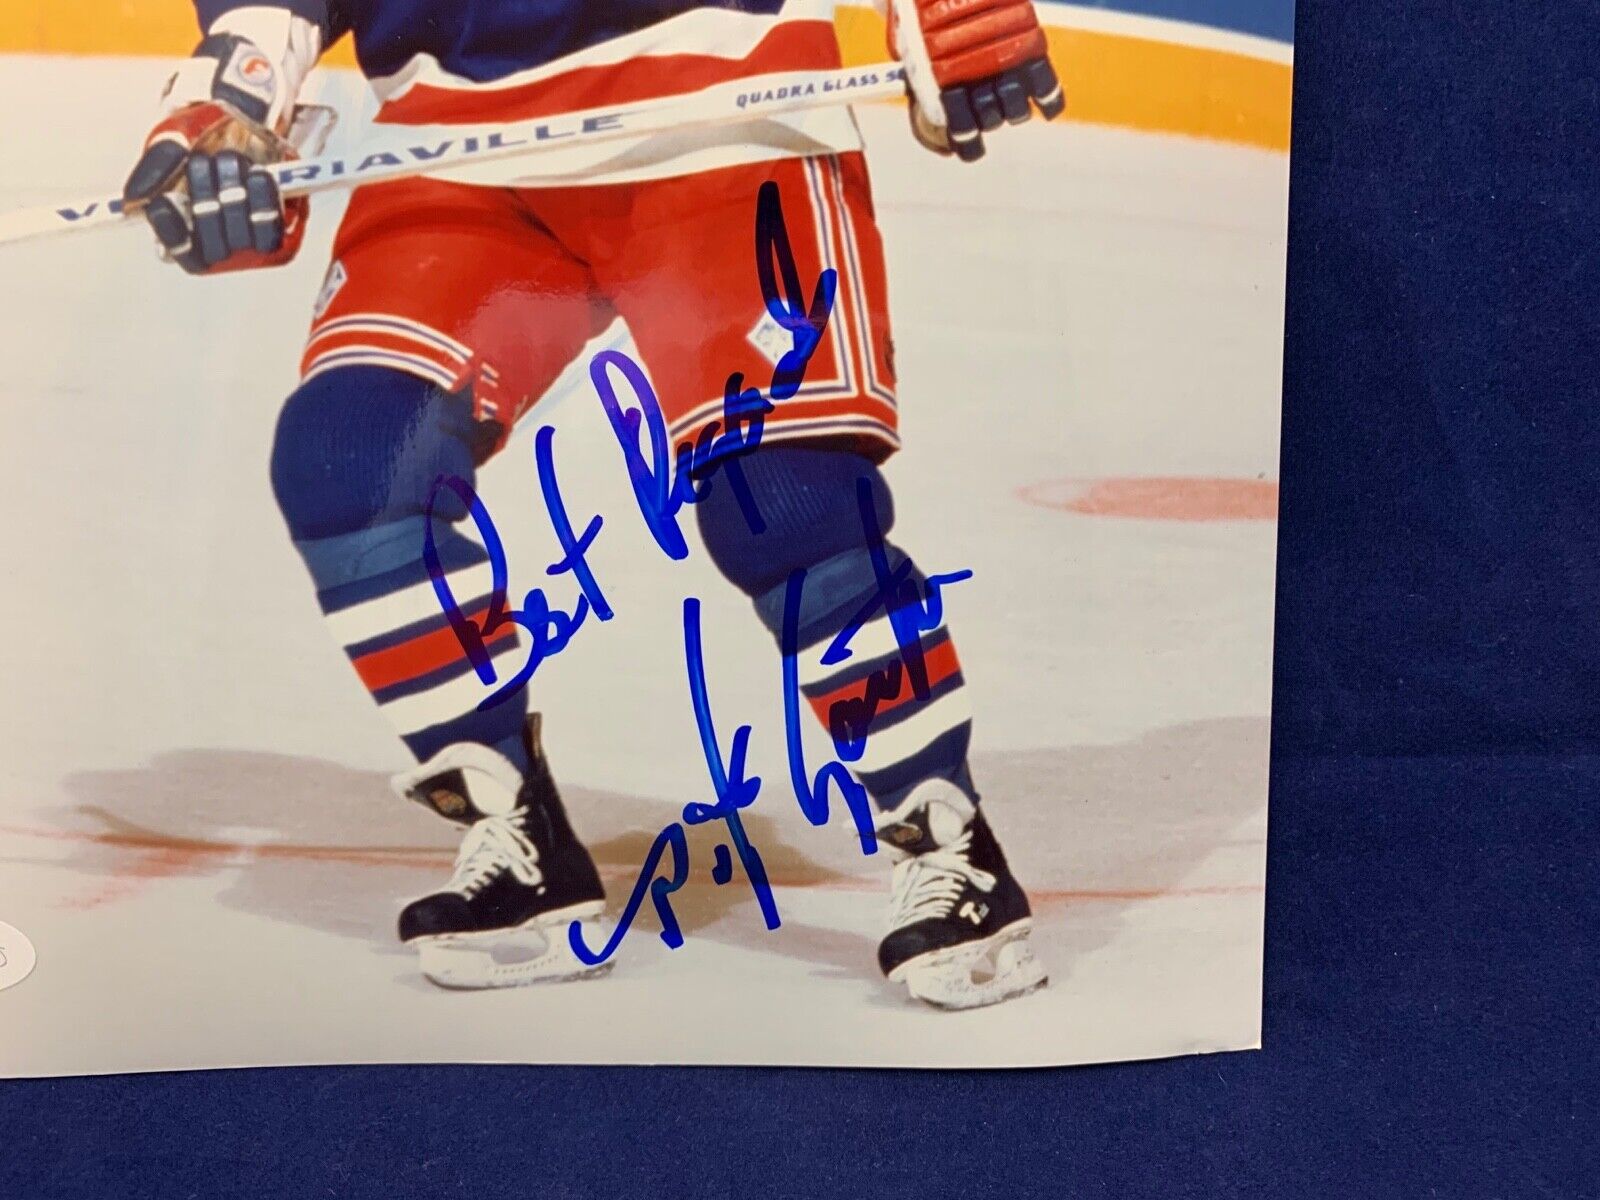 Mike Gartner New York Rangers Autographed 8x10 Sports Photo JSA COA HH75251